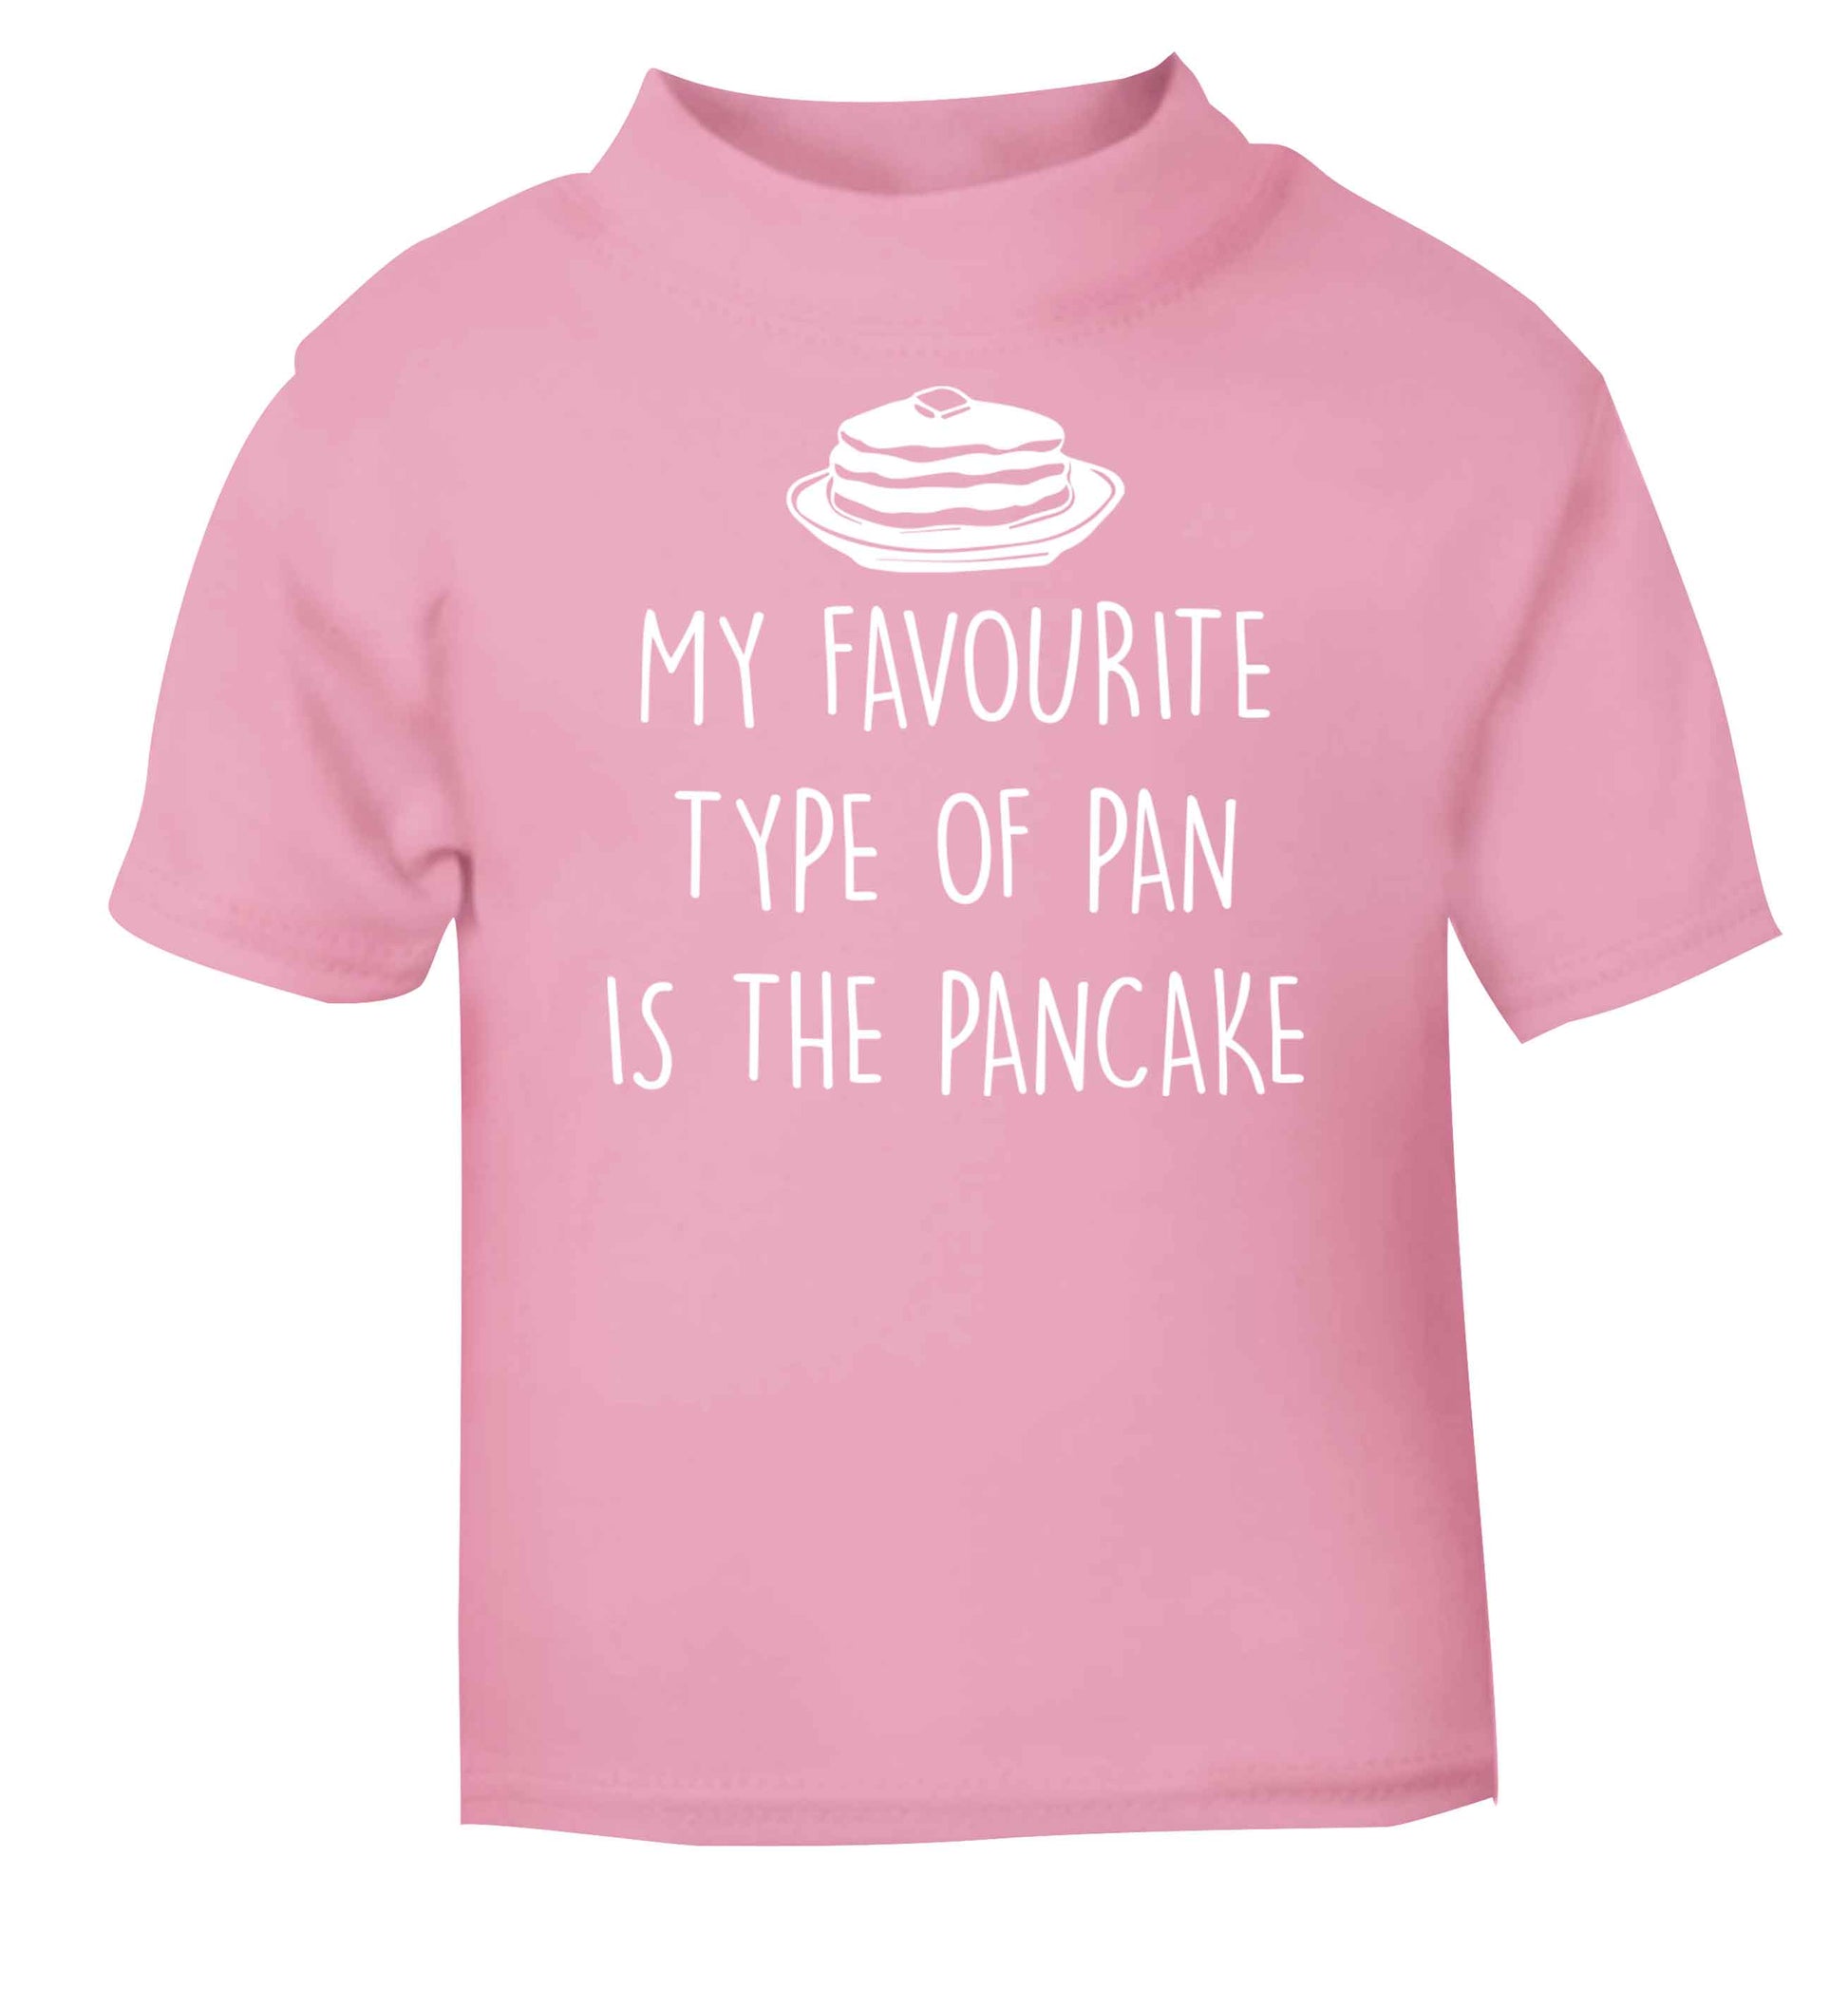 My favourite type of pan is the pancake light pink baby toddler Tshirt 2 Years